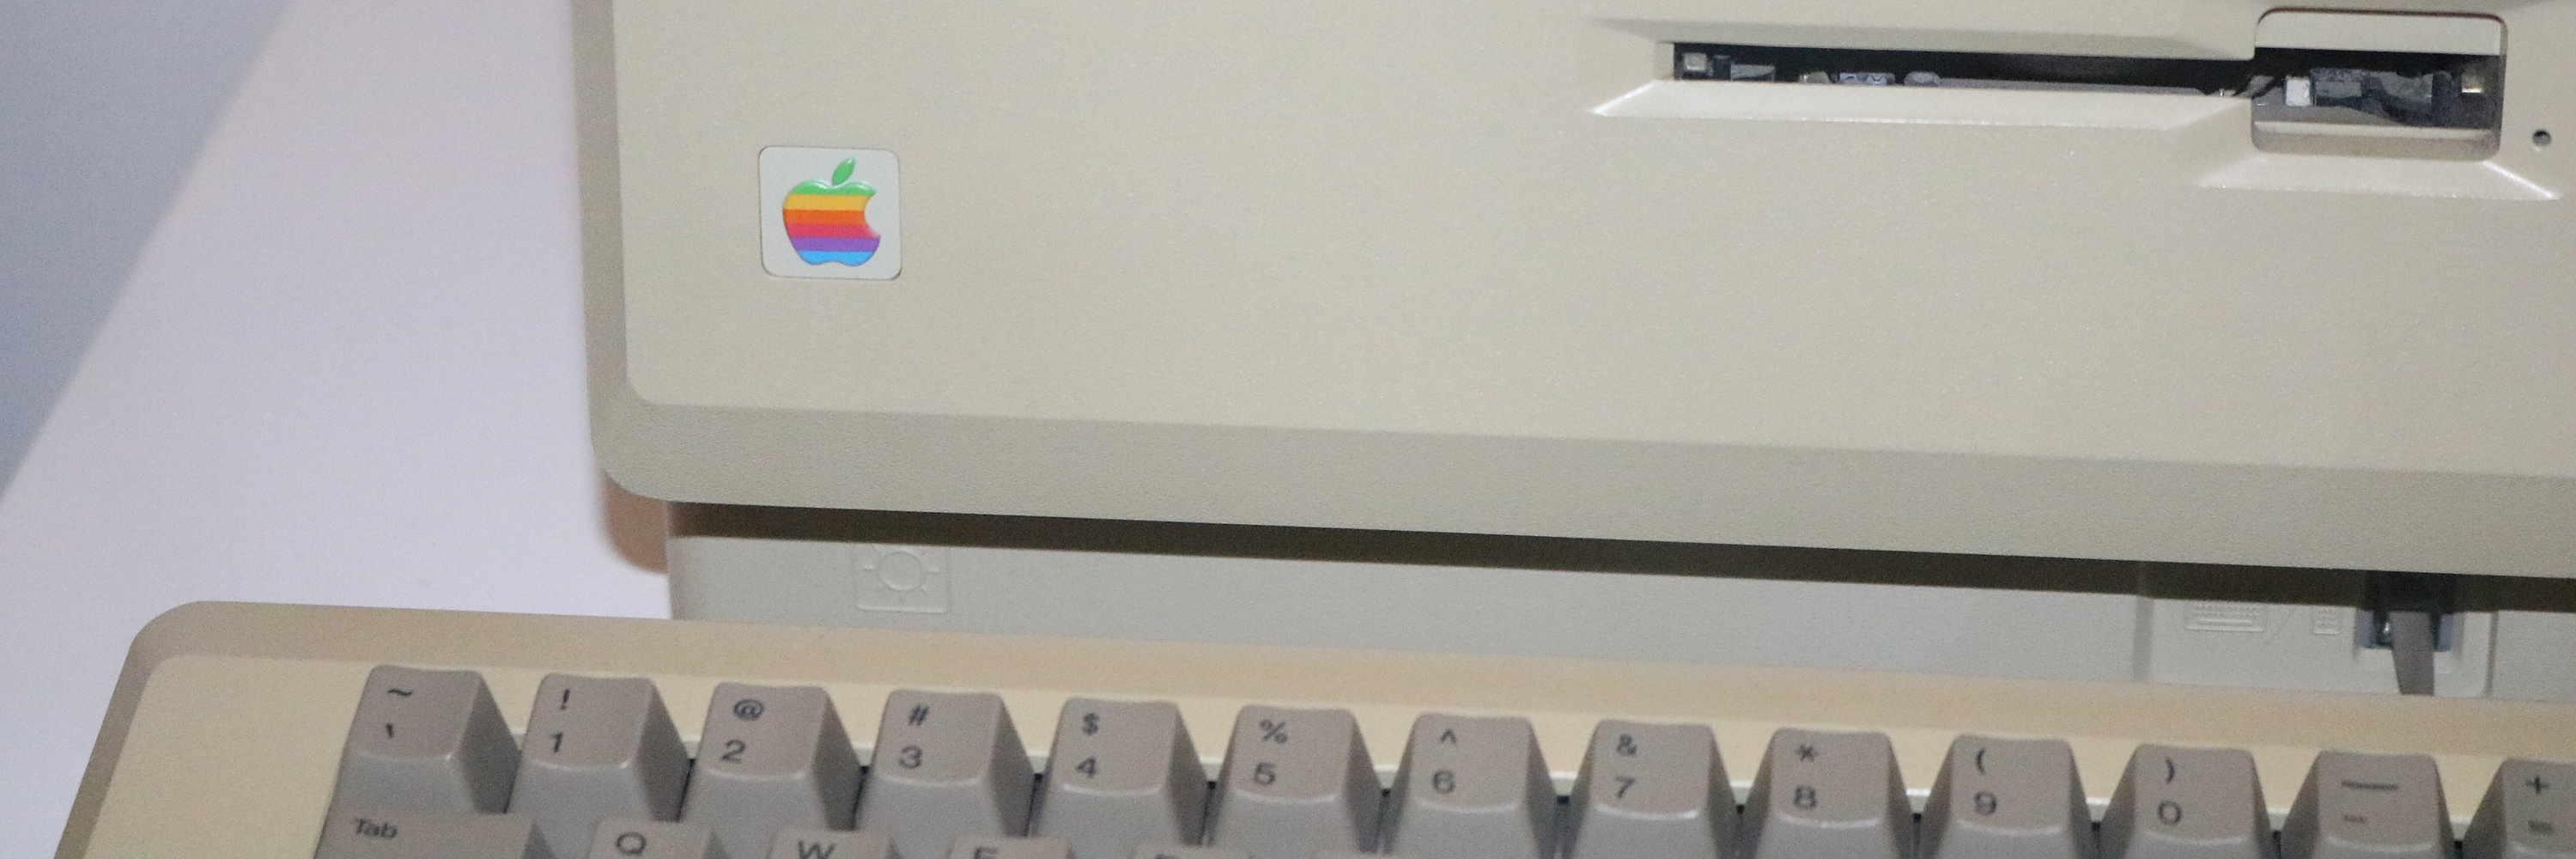 close-up of Apple Macintosh